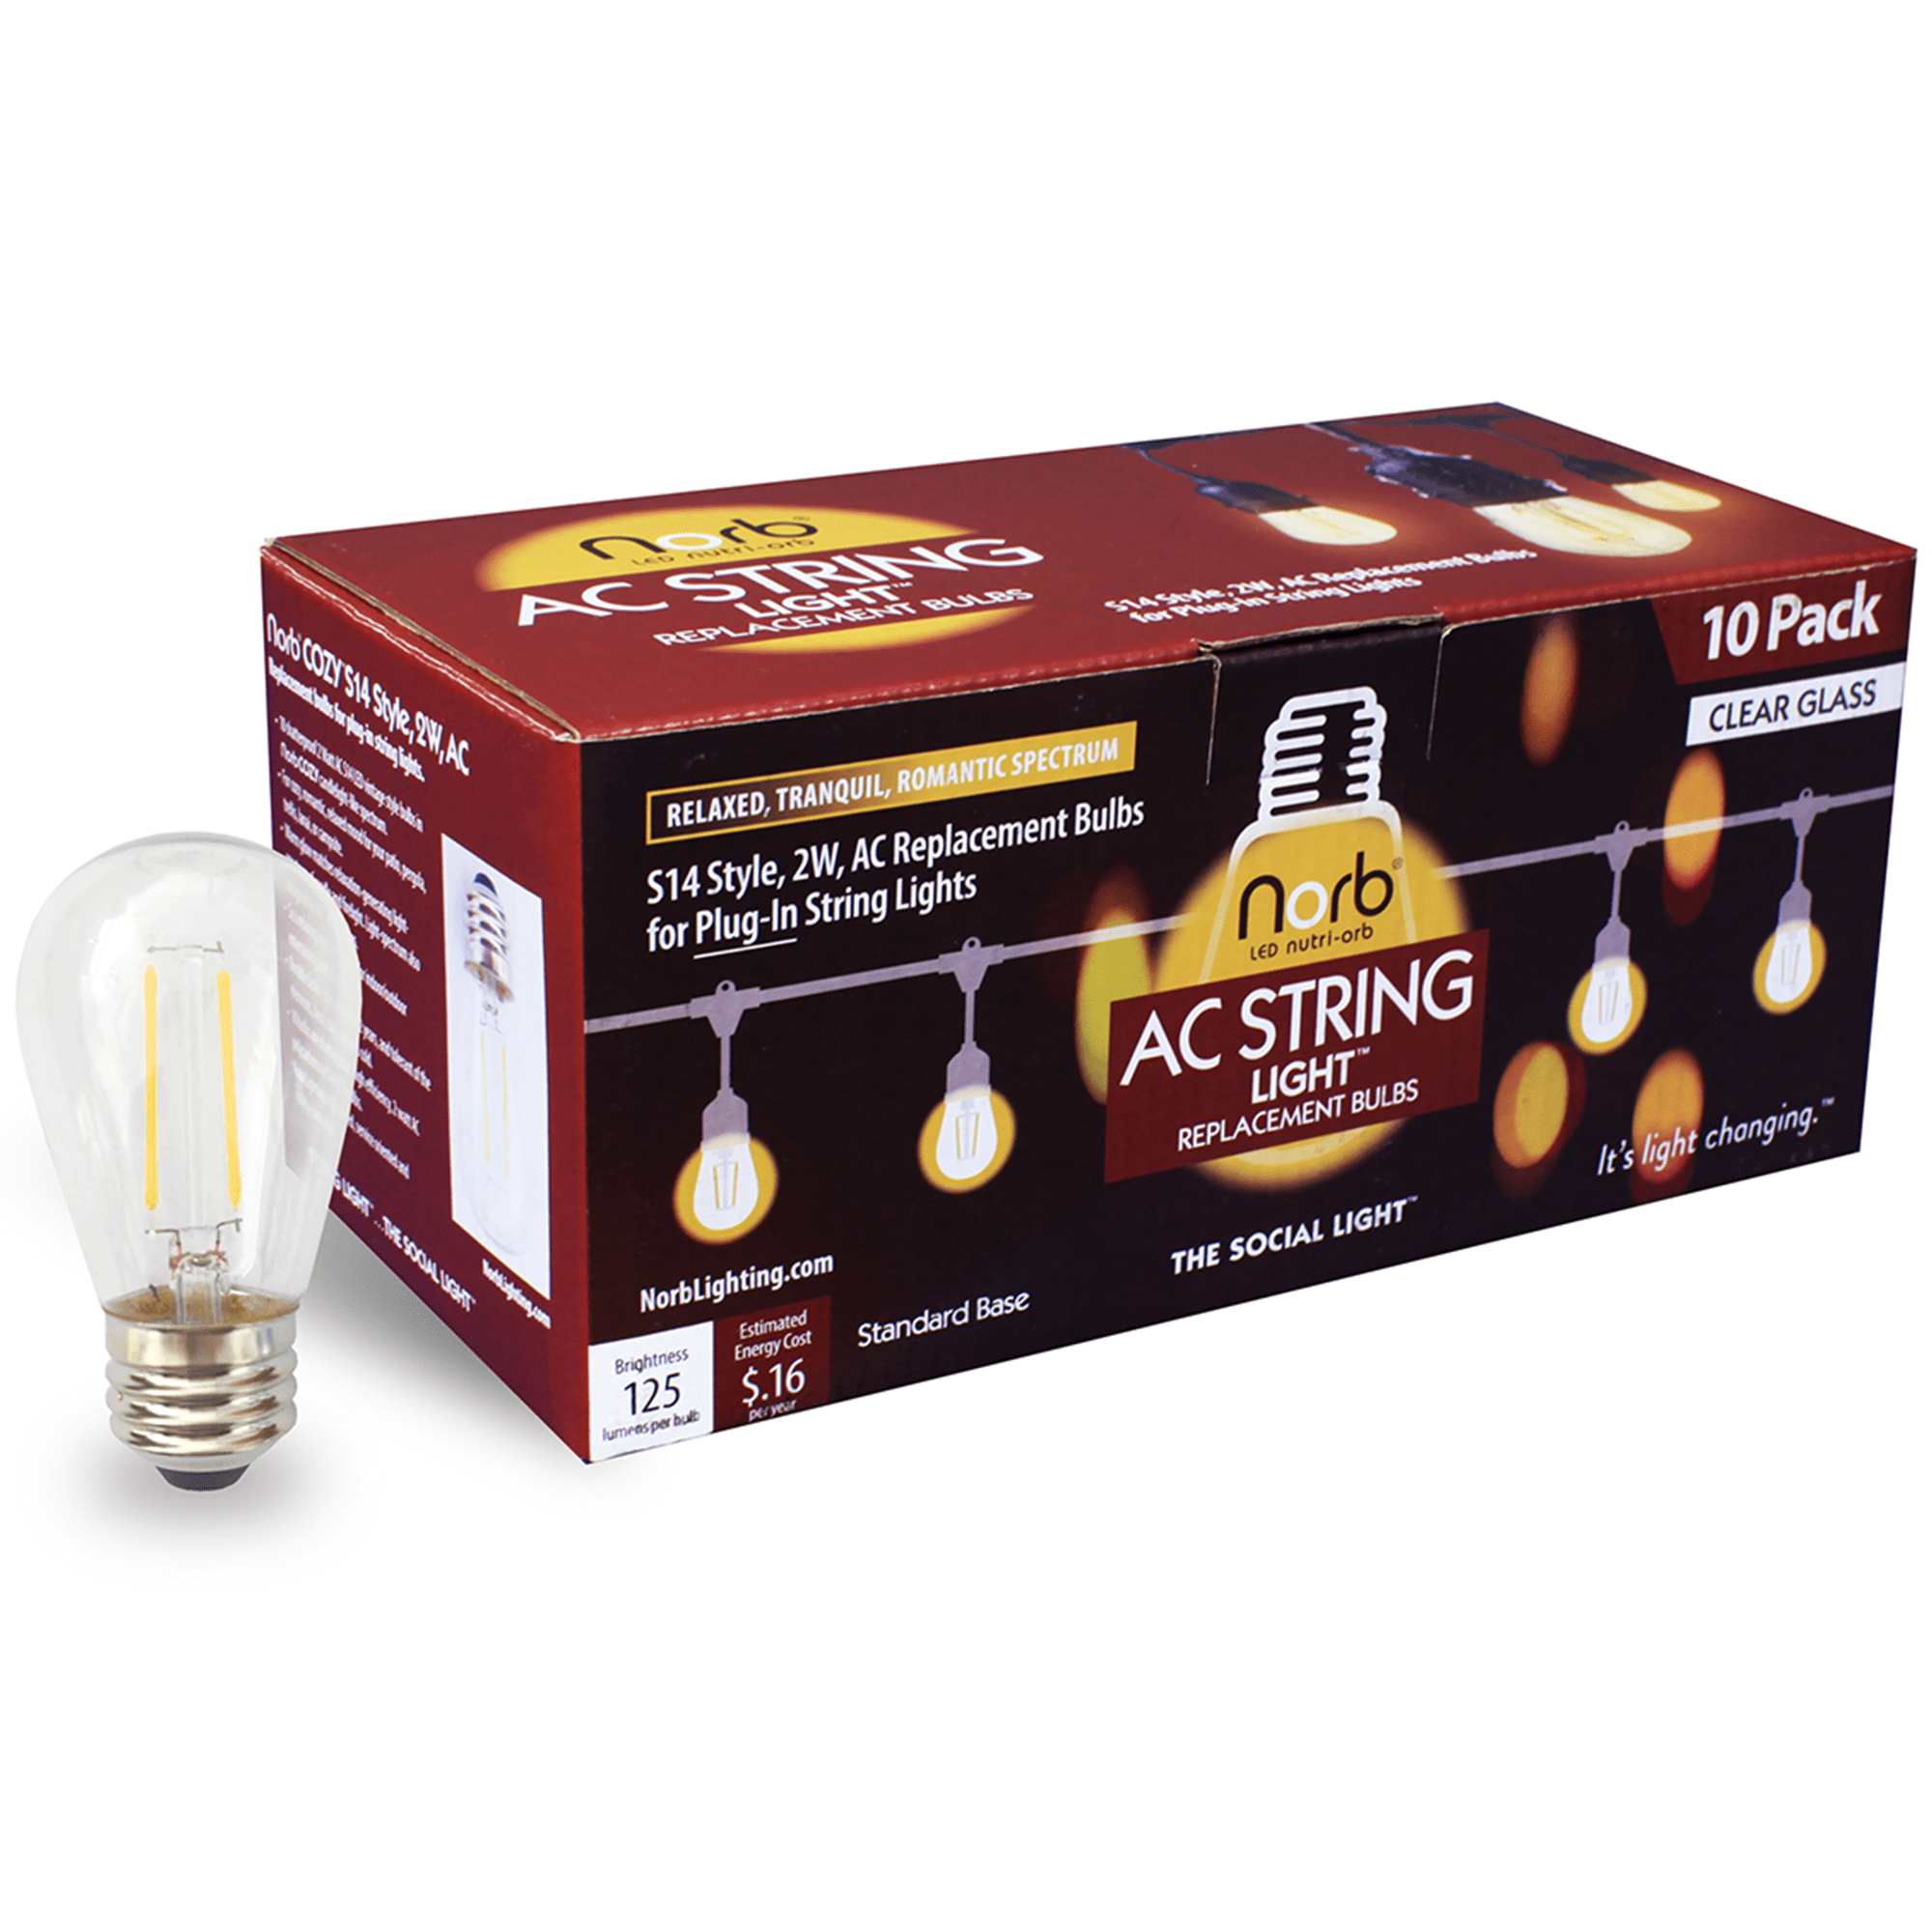 Evolution Salt Company Himalayan Salt Lamp Replacement Bulb 120v 15 Watts 4 Pack 